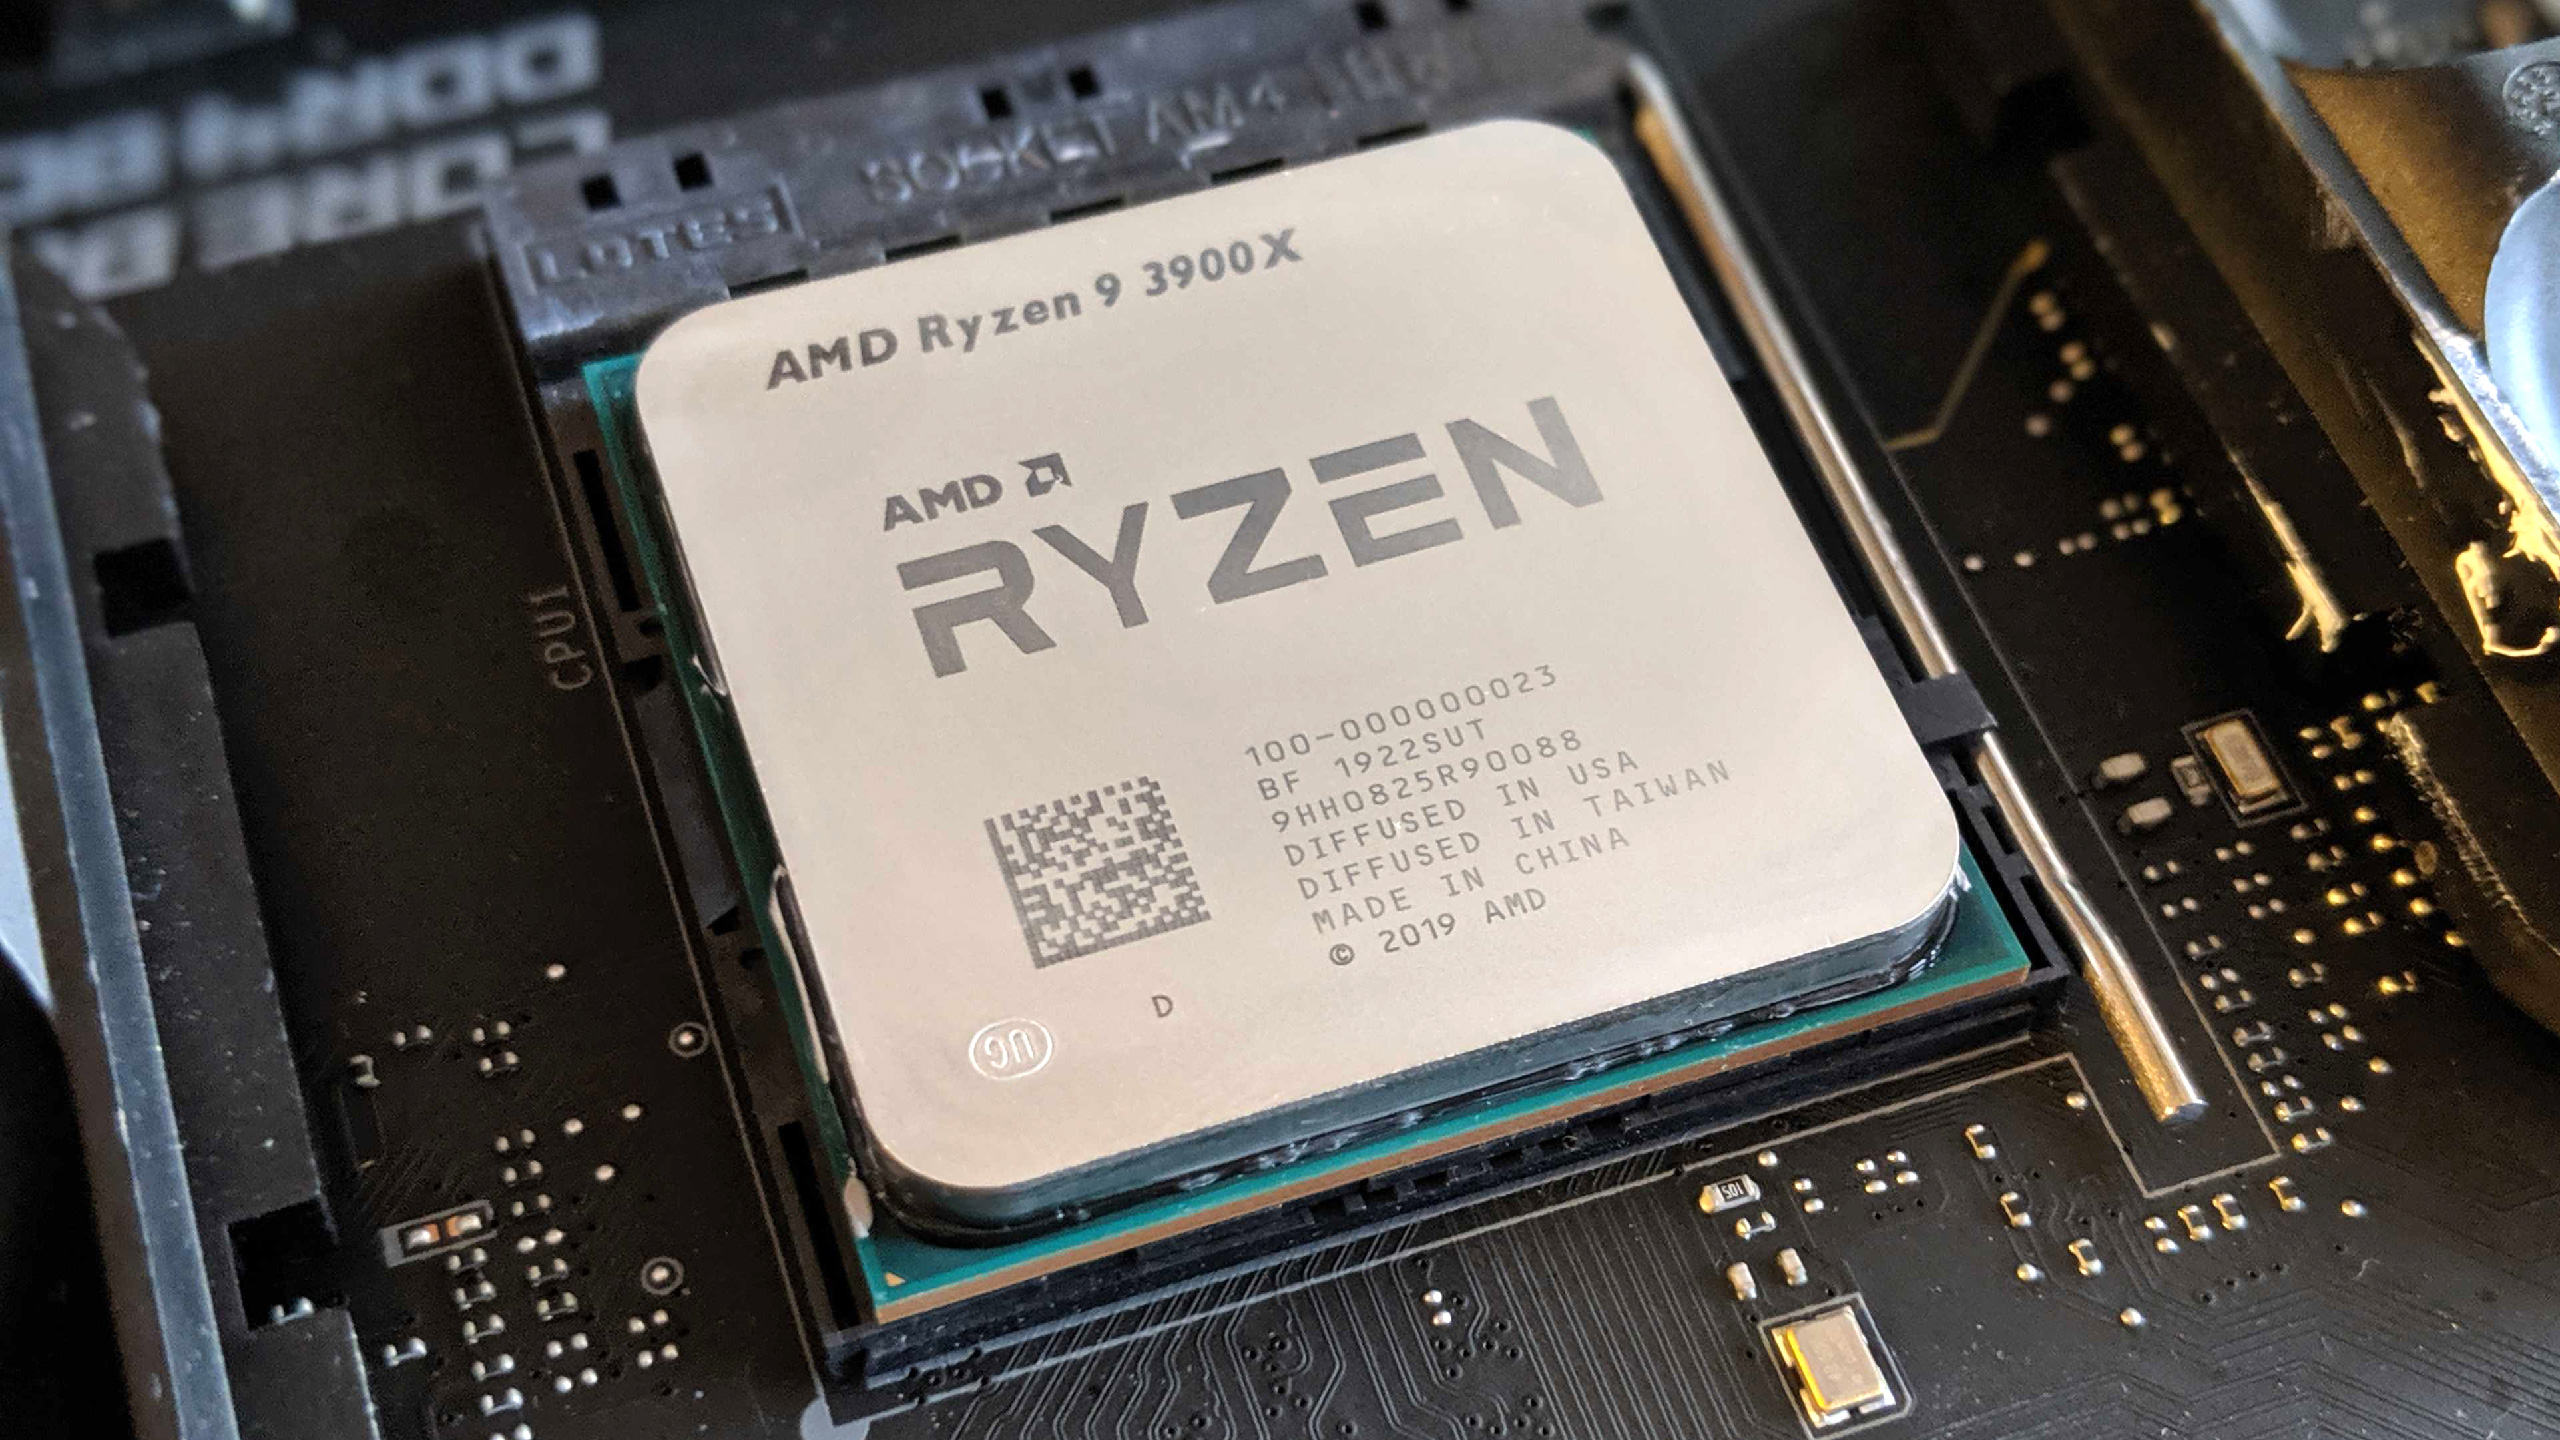 5. AMD Ryzen 9 3900X